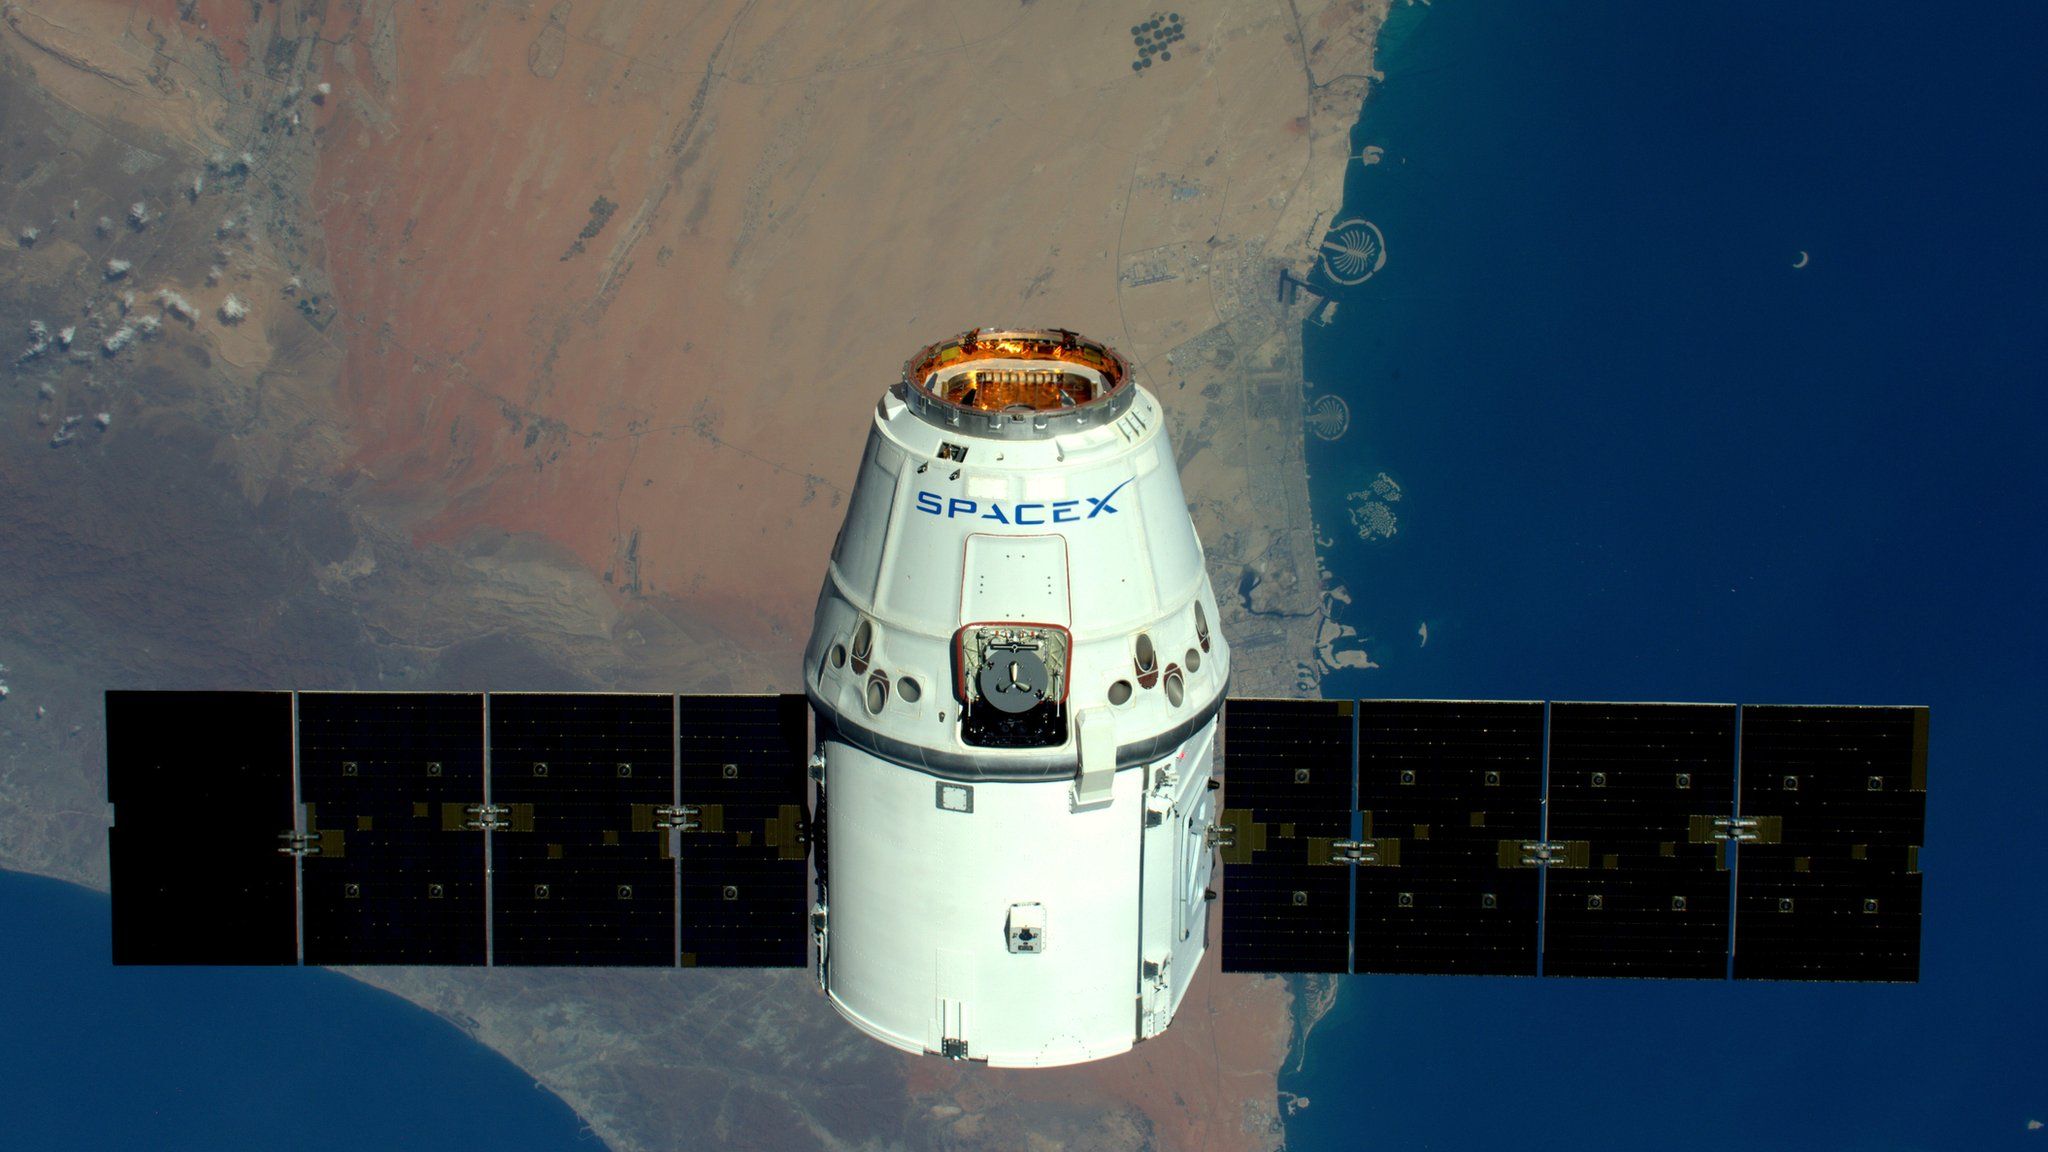 SpaceX spacecraft